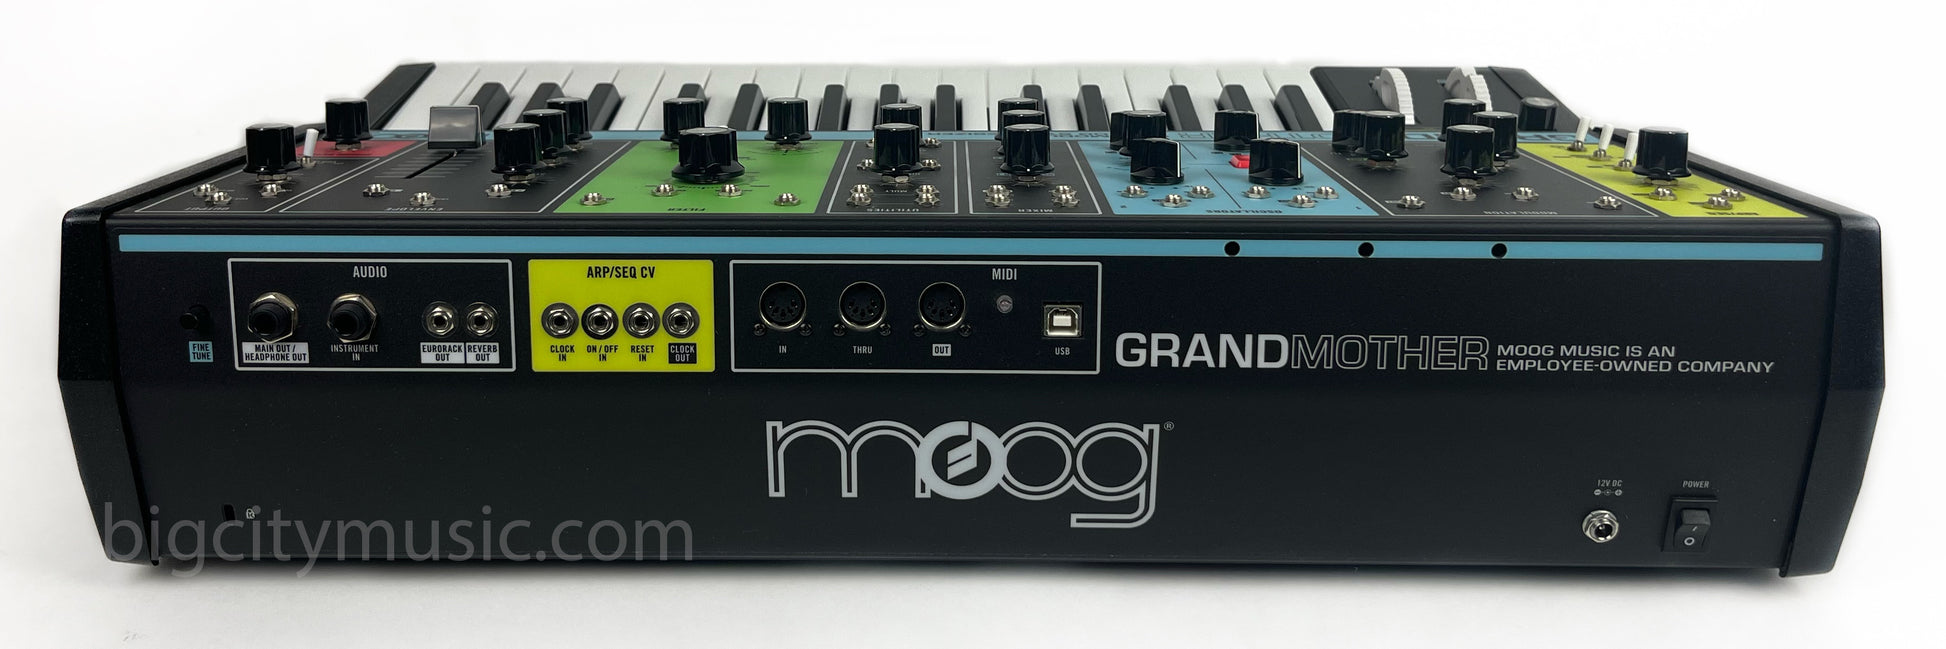 Moog Grandmother synthé semi-modulaire analogique